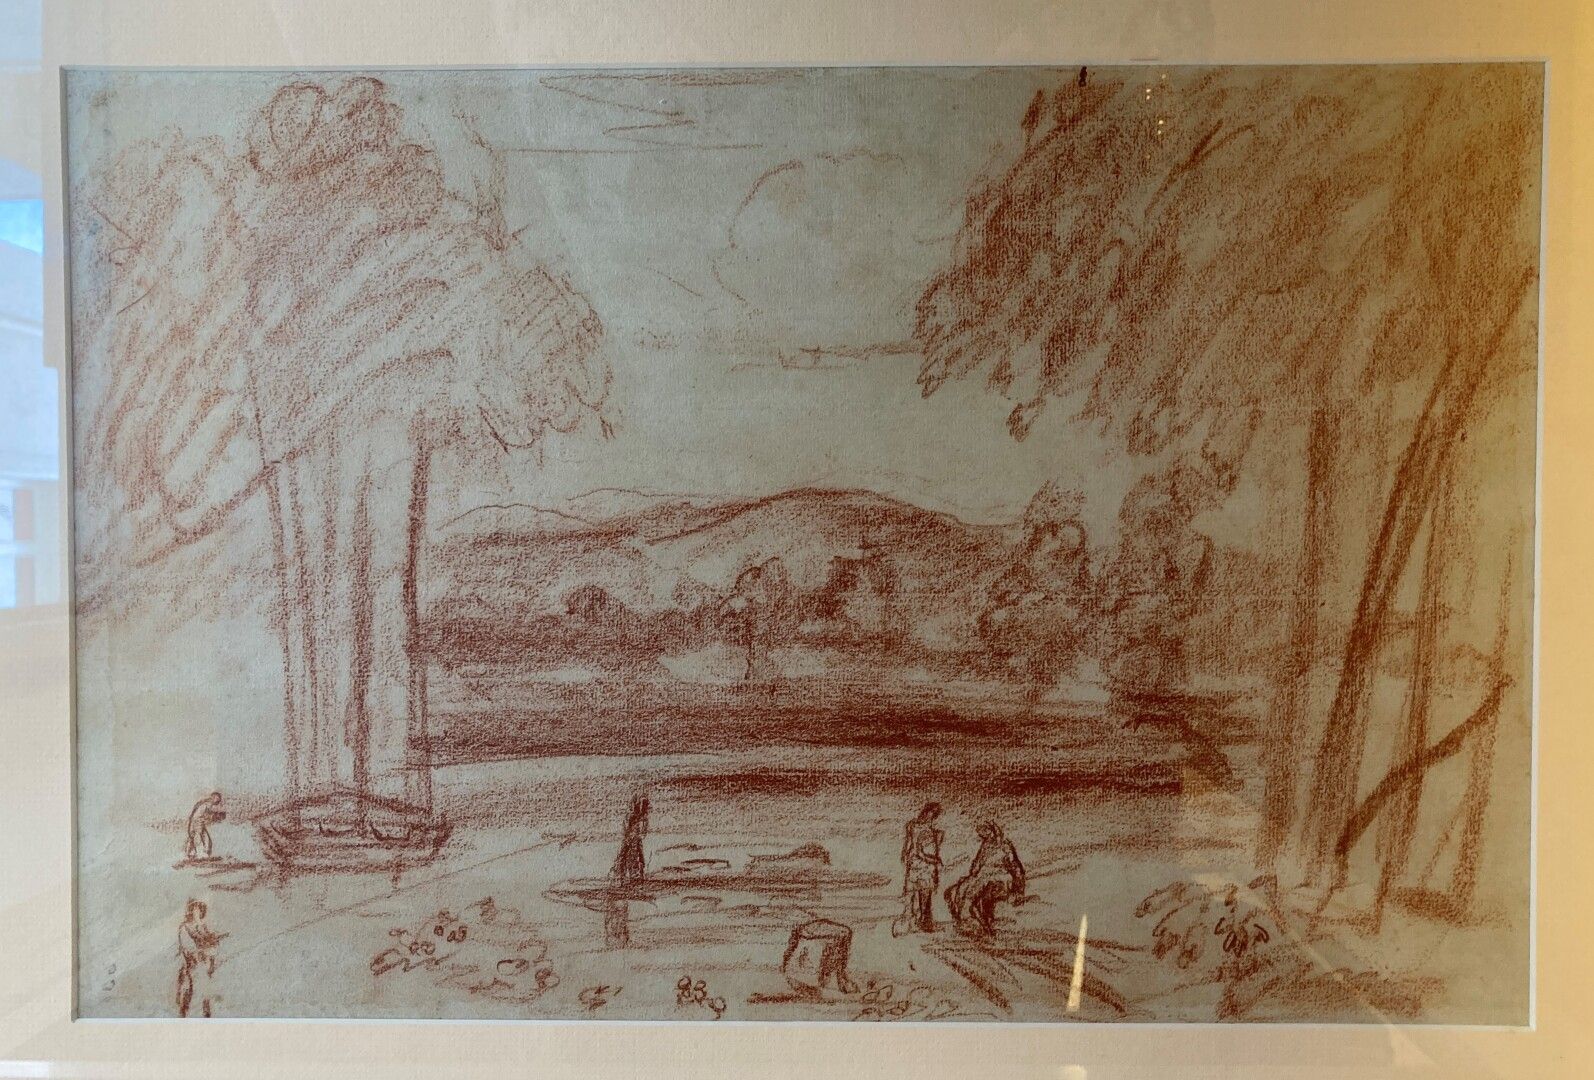 Null SCUOLA FRANCESE 1900 circa

Paesaggio con alberi

Sanguigna

23 x 43 cm